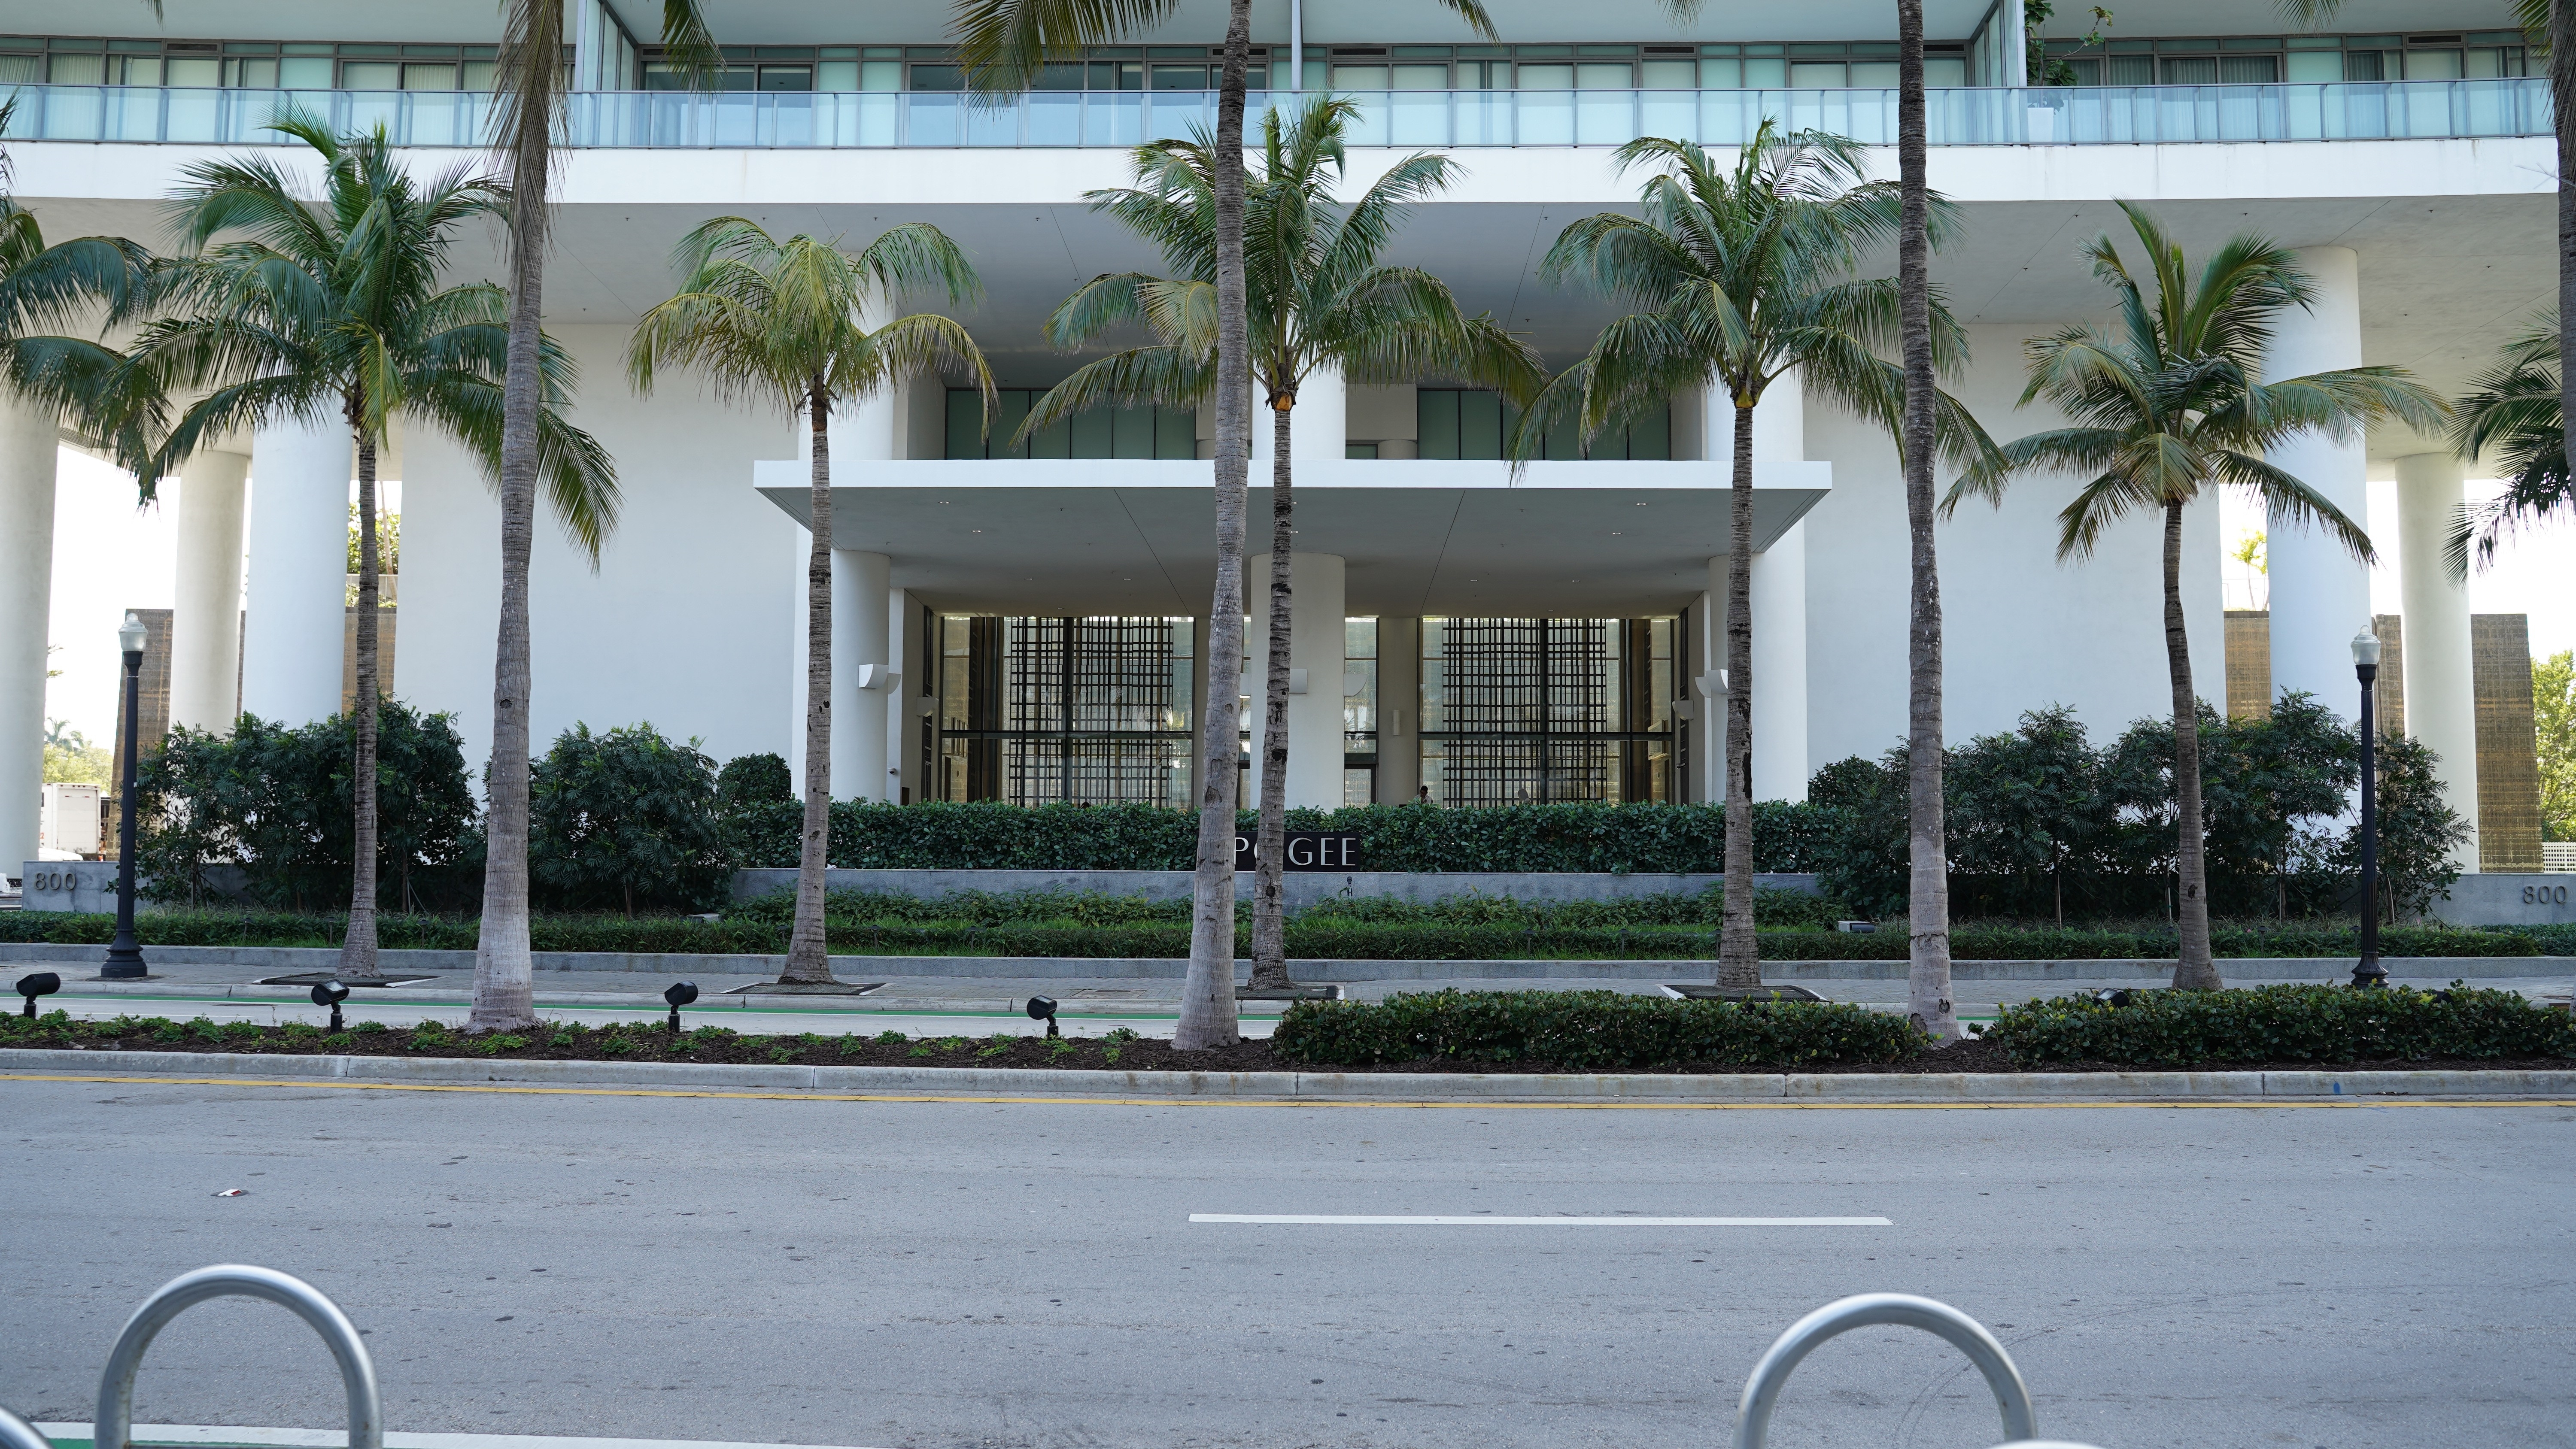 2. Apogee building at 800 South Pointe Drive, South Point, Miami Beach, FL 33139